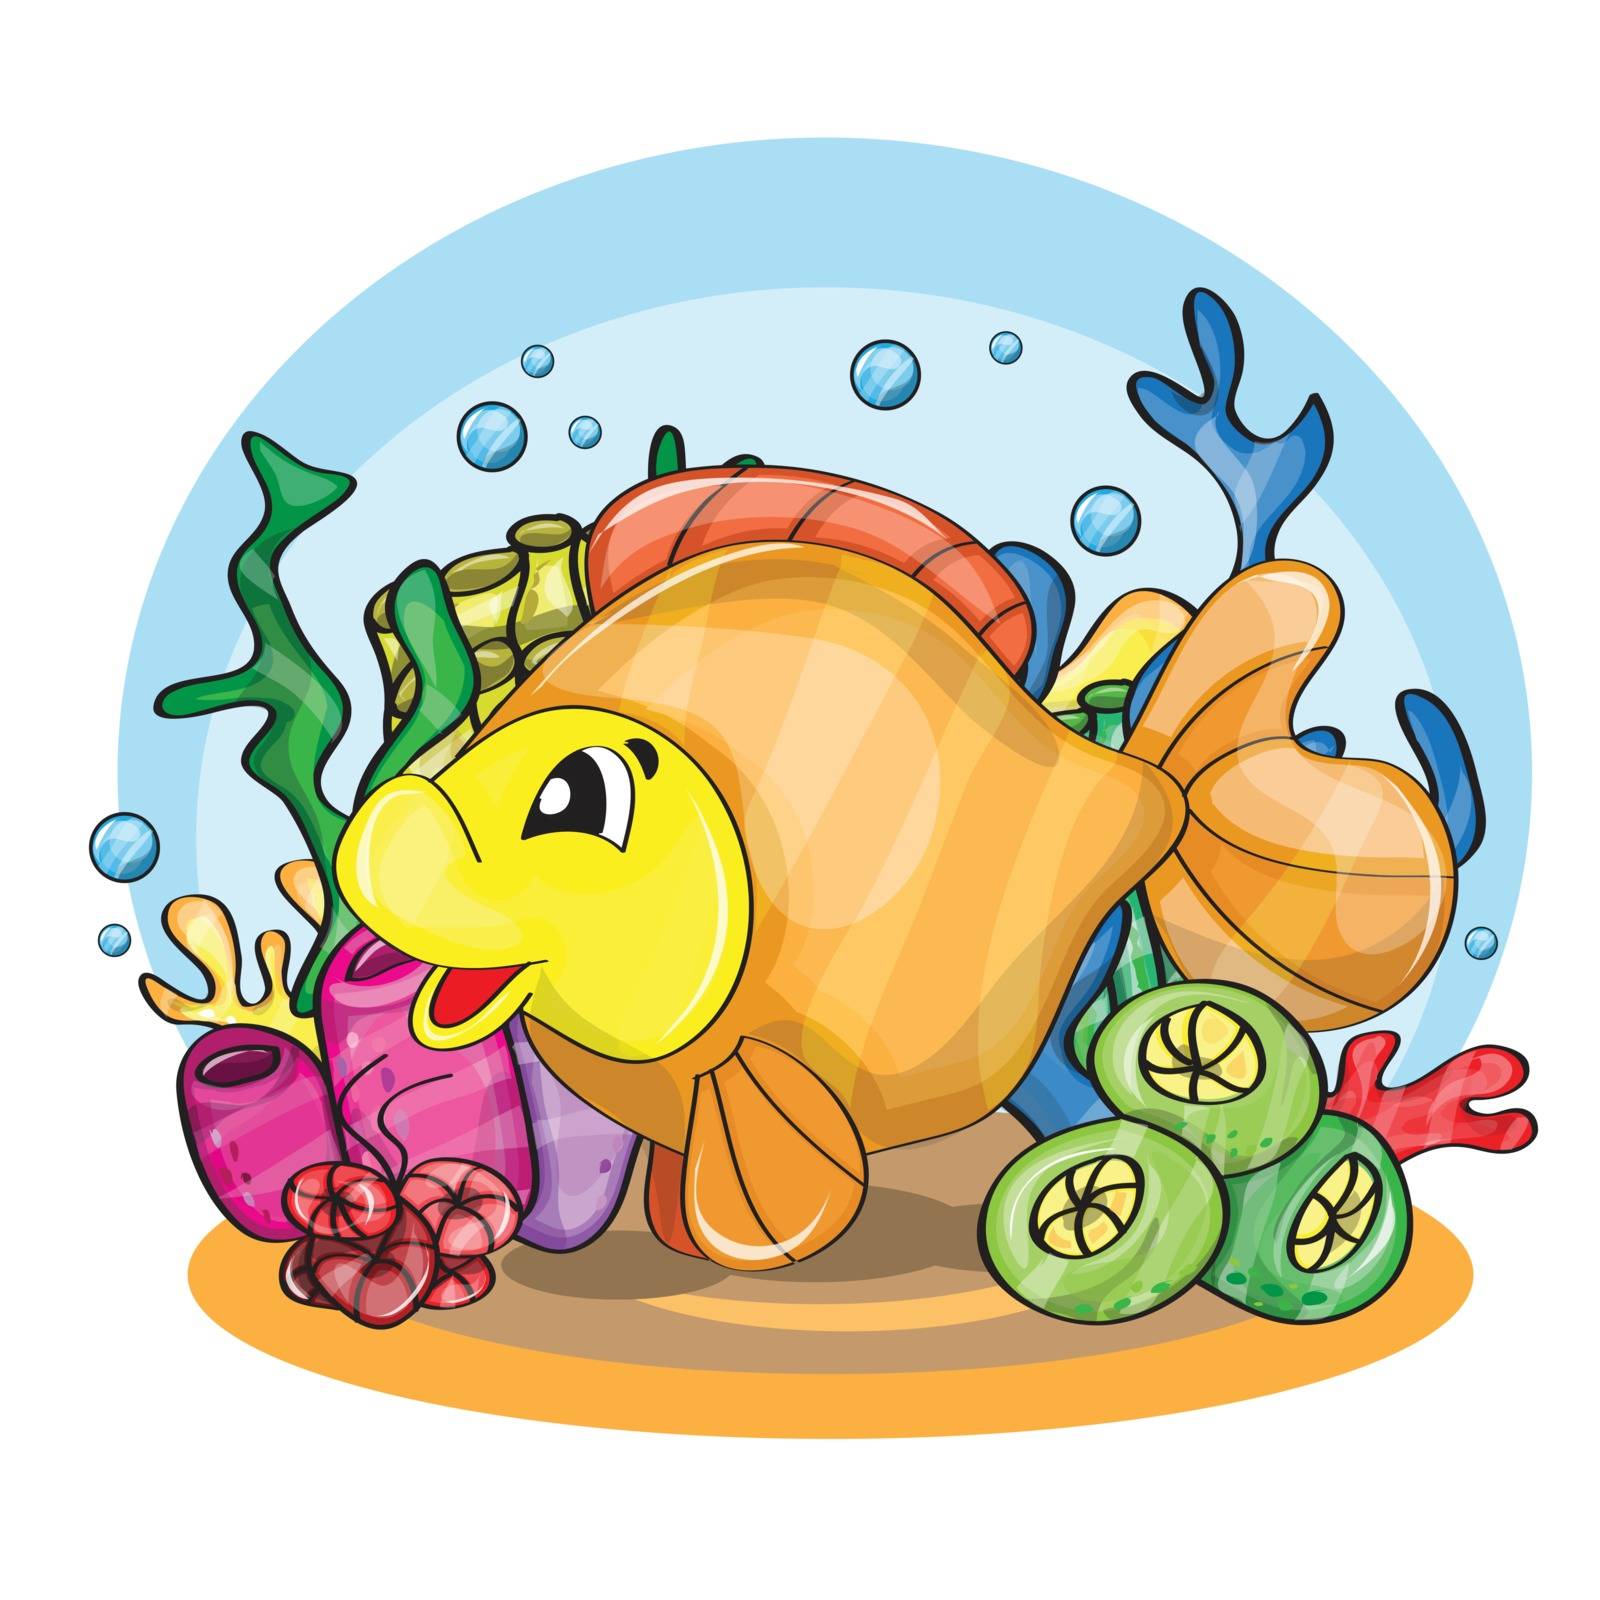 Illustration of a happy goldfish cartoon character 